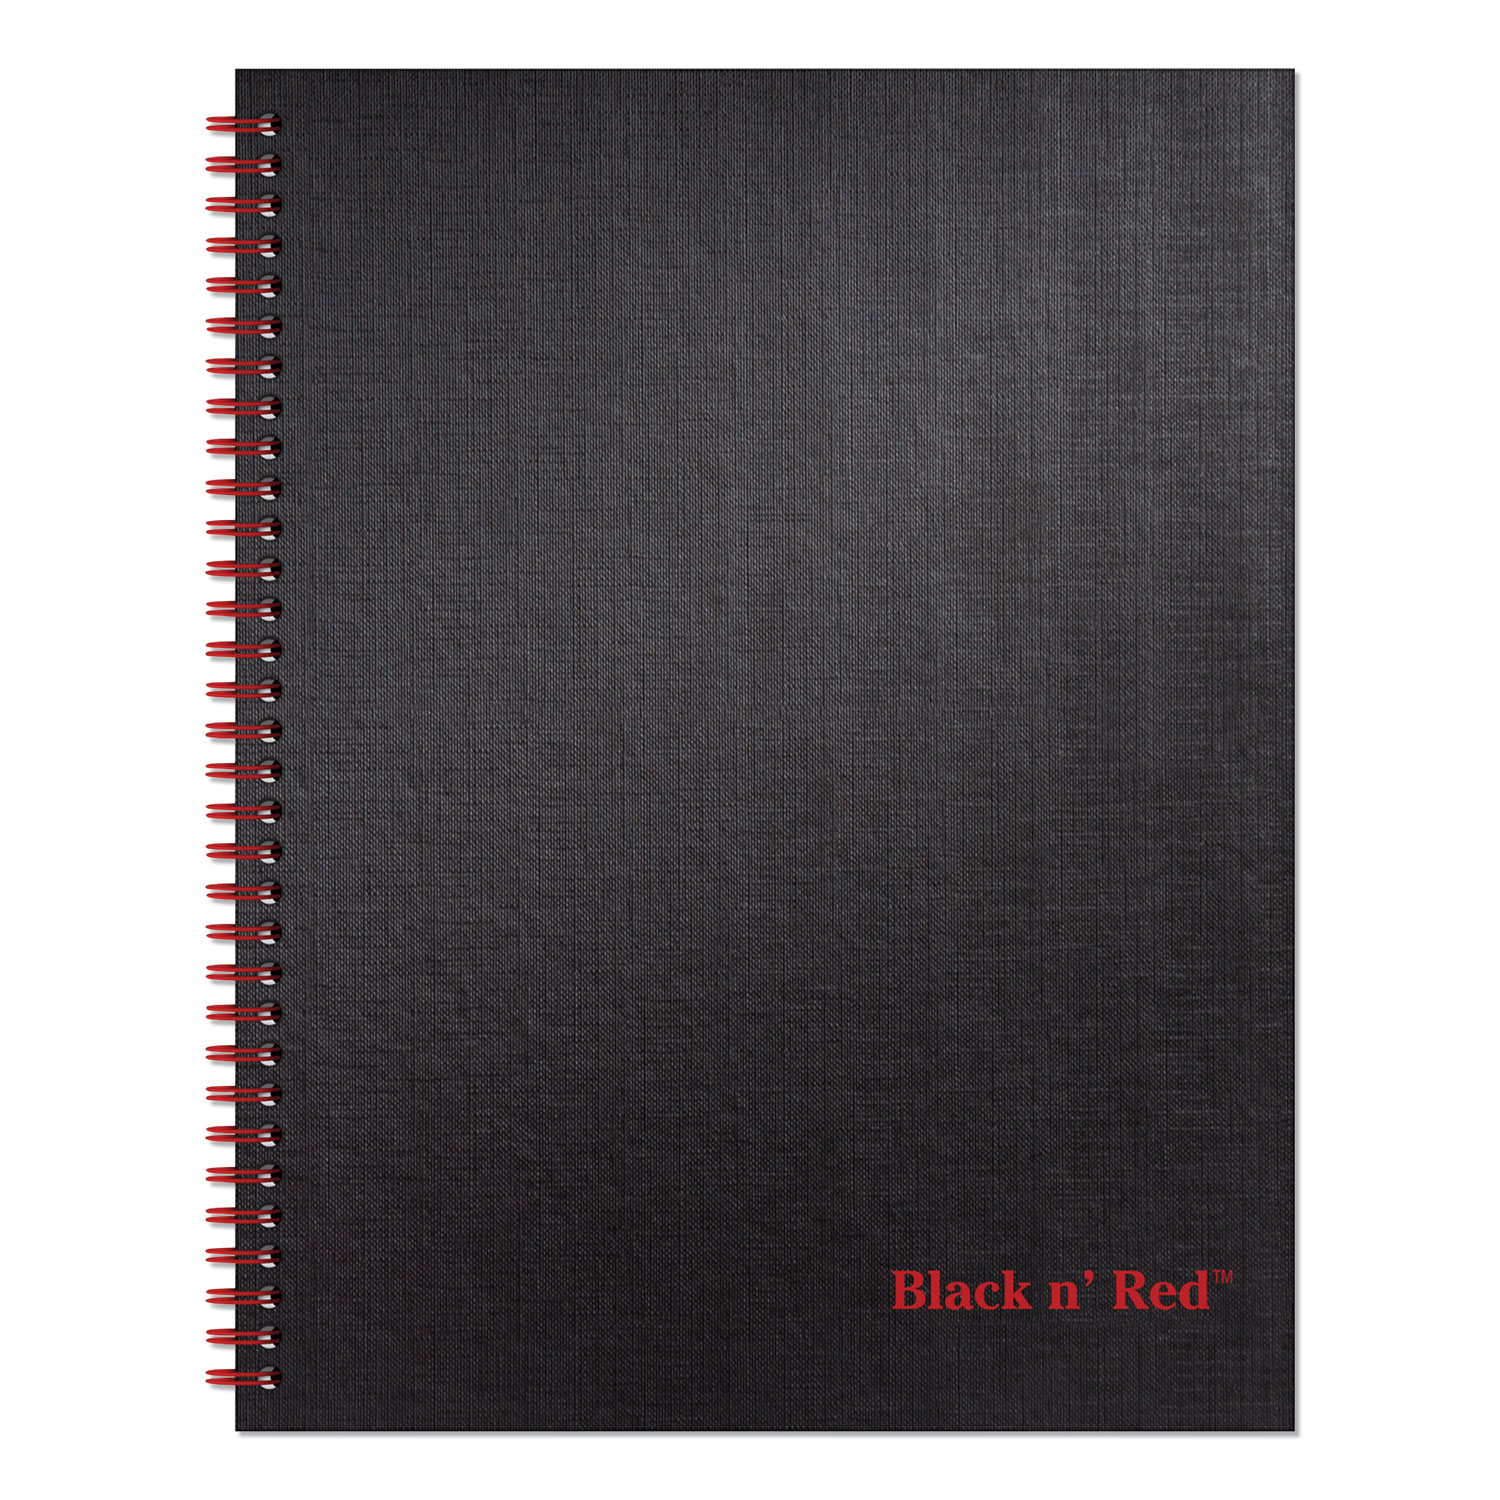  Black n' Red K67030 Twinwire Hardcover Notebook, Wide/Legal Rule, Black Cover, 11 x 8.5, 70 Sheets (JDKK67030) 